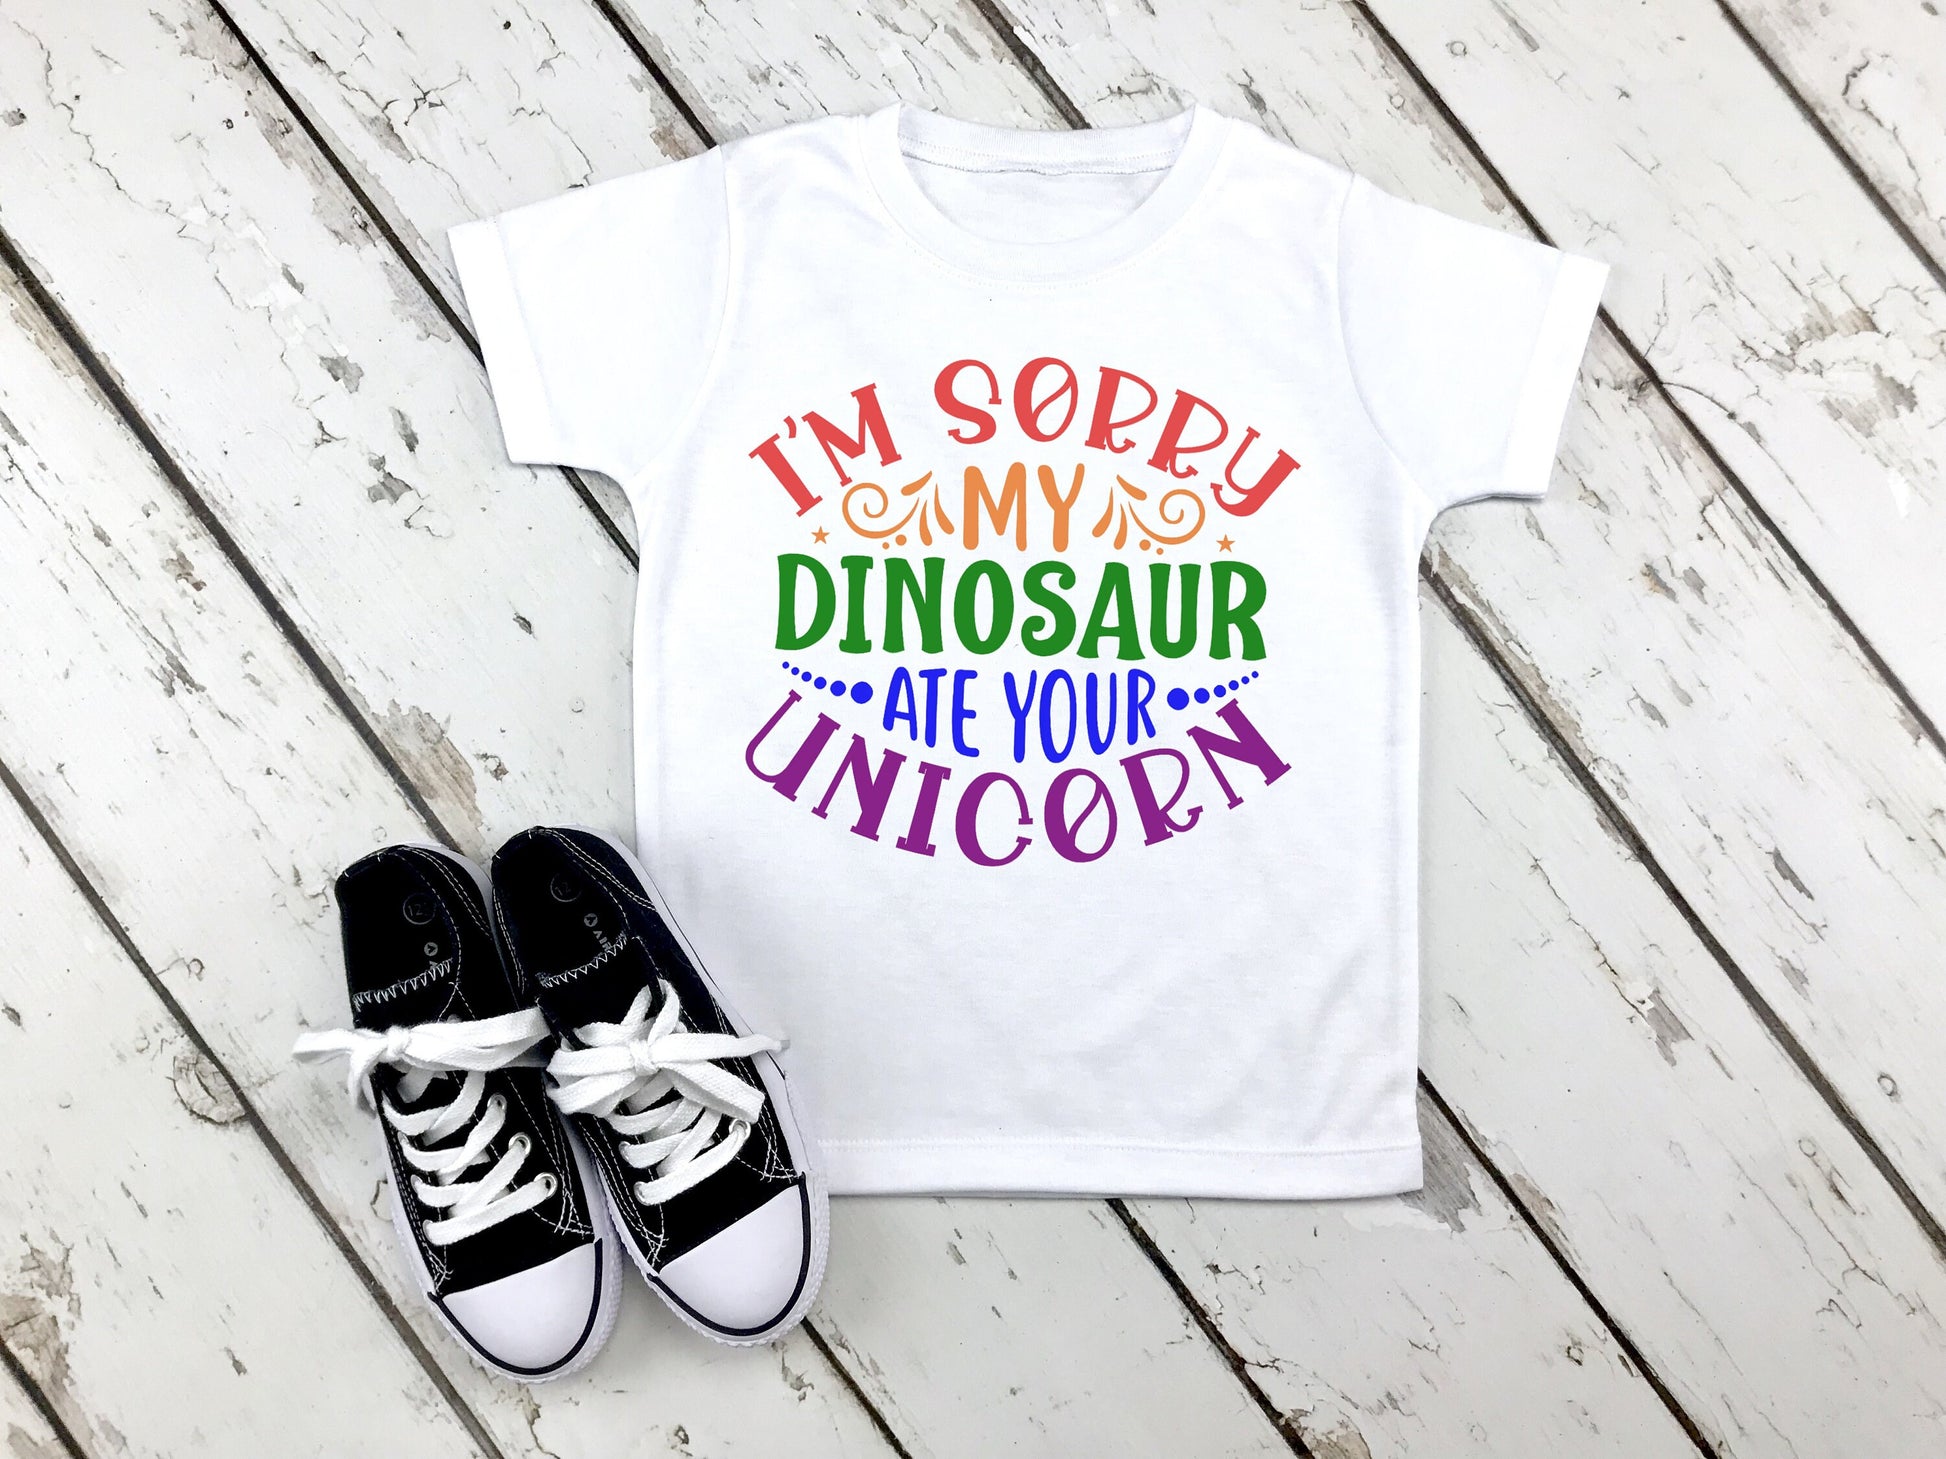 I'm Sorry My Dinosaur Ate Your Unicorn Unisex Infant Toddler or Kids Shirt - Smart Girl Shirt -  Dinosaur Birthday Party